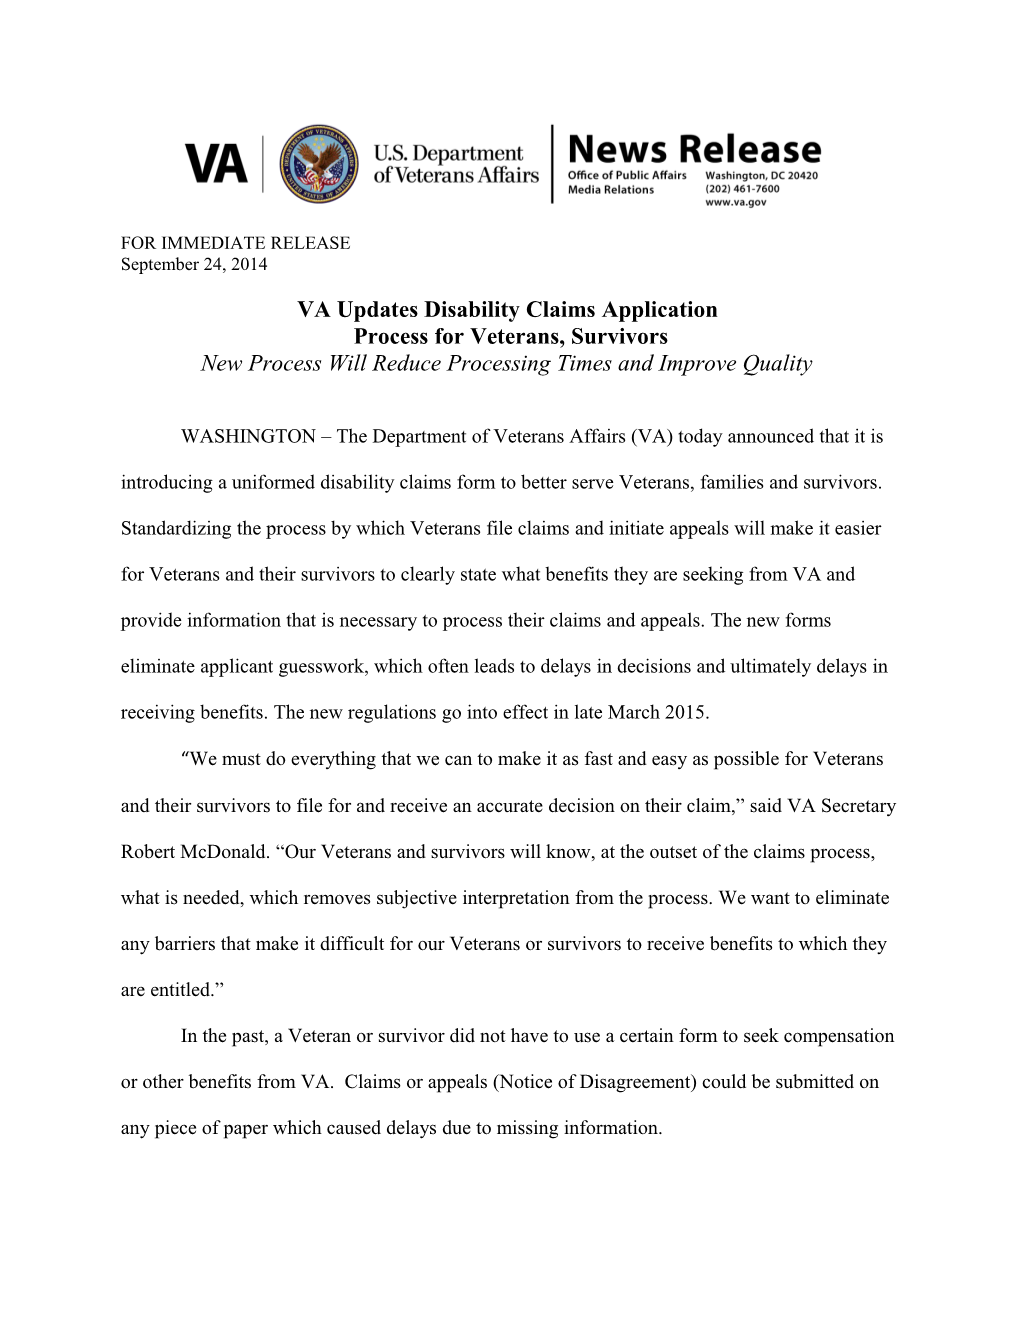 VA Updates Disability Claims Application Process for Veterans, Survivors